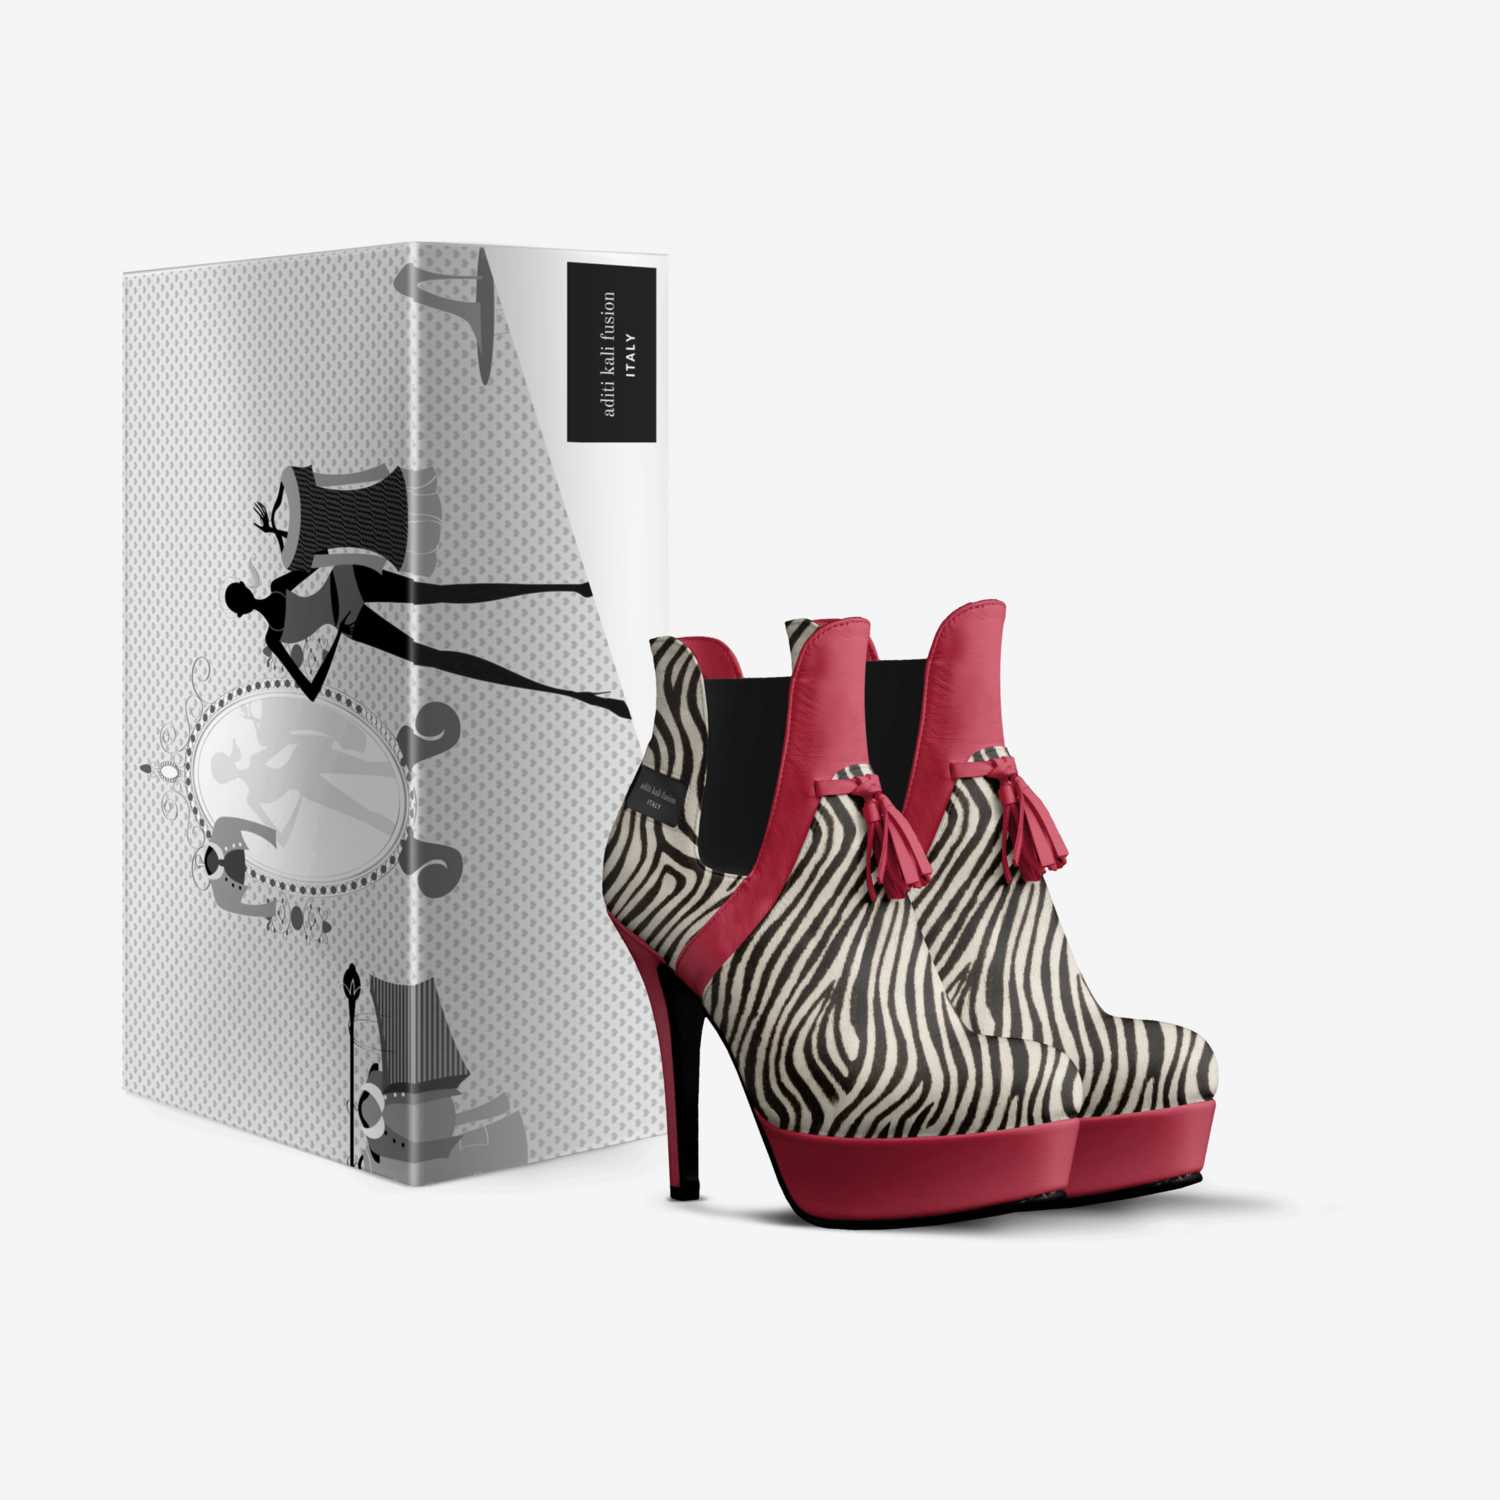 aditi kali fusion custom made in Italy shoes by Aditi-kali Of Wonkey Donkey Bazaar | Box view